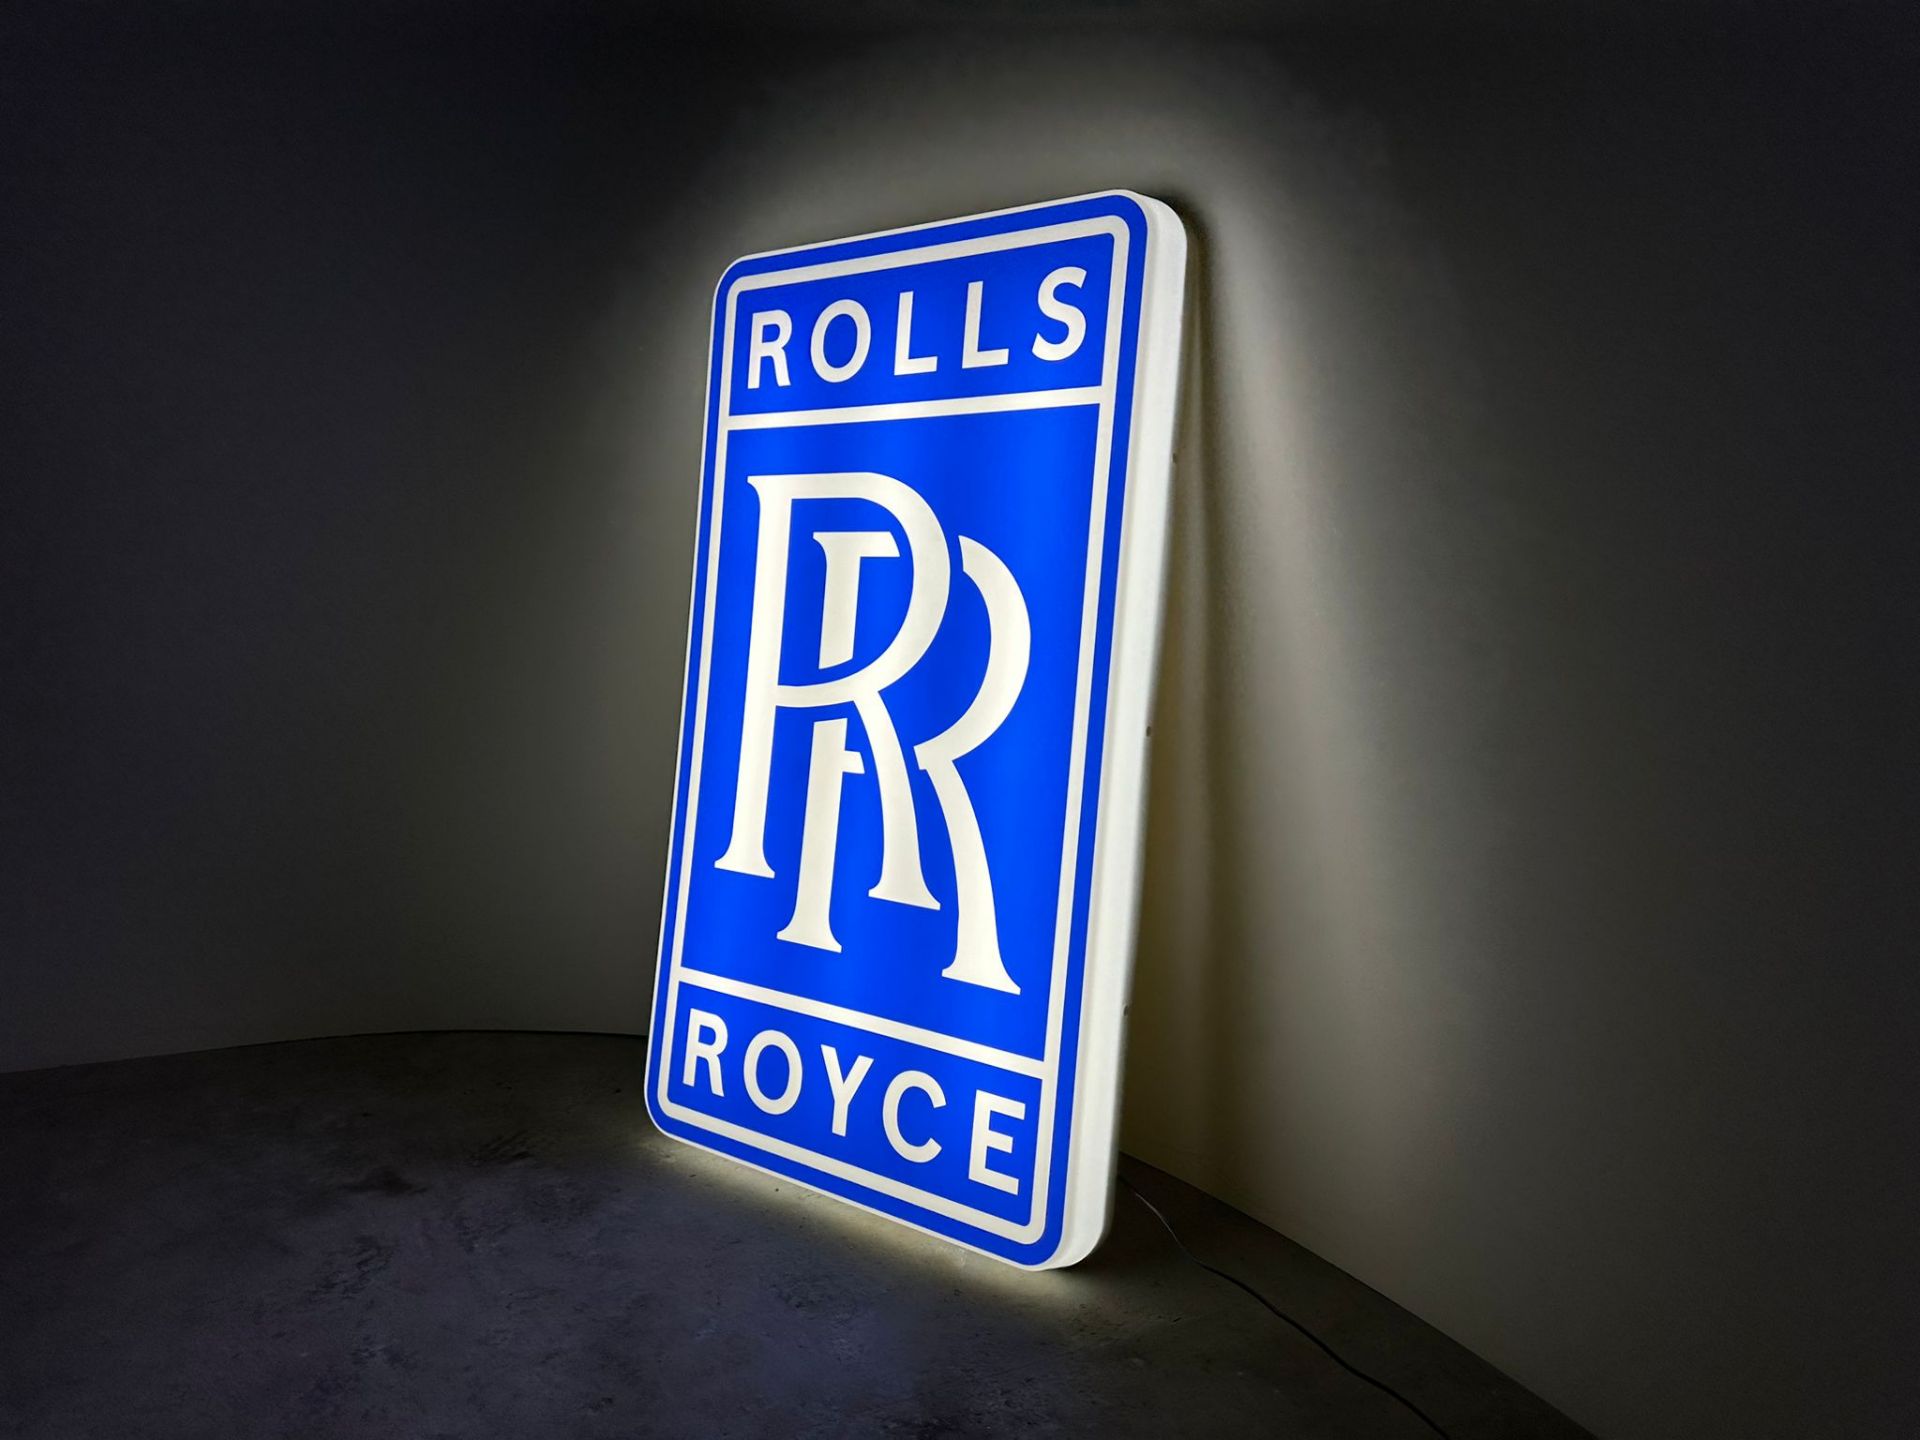 Rolls Royce illuminated sign - Image 3 of 9